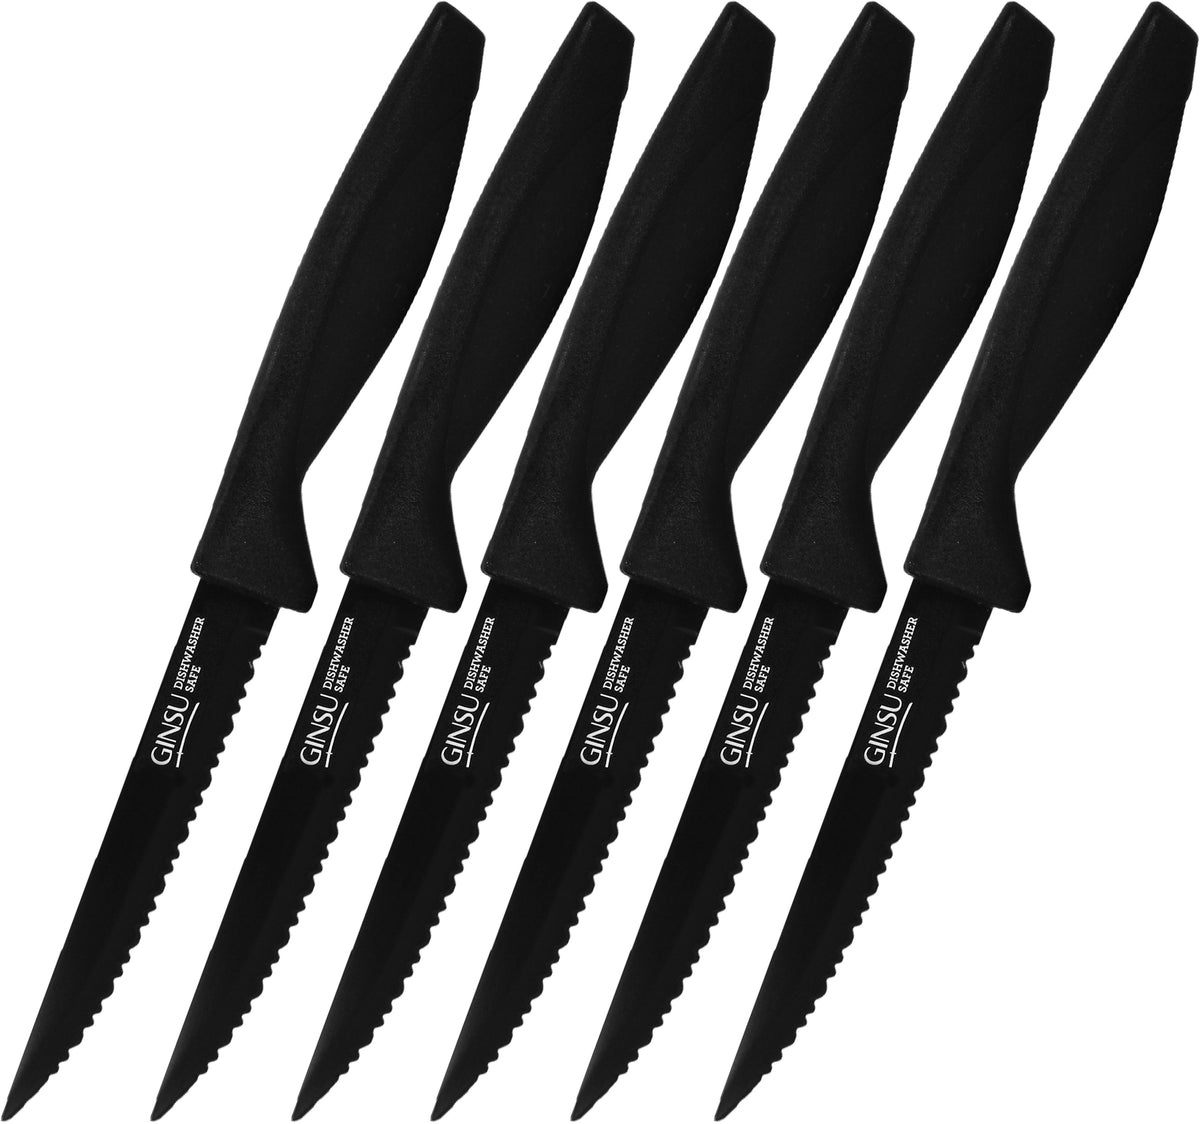 SiliSlick 6 Piece Black Steak Knife Set - Black Handle, Black Blade